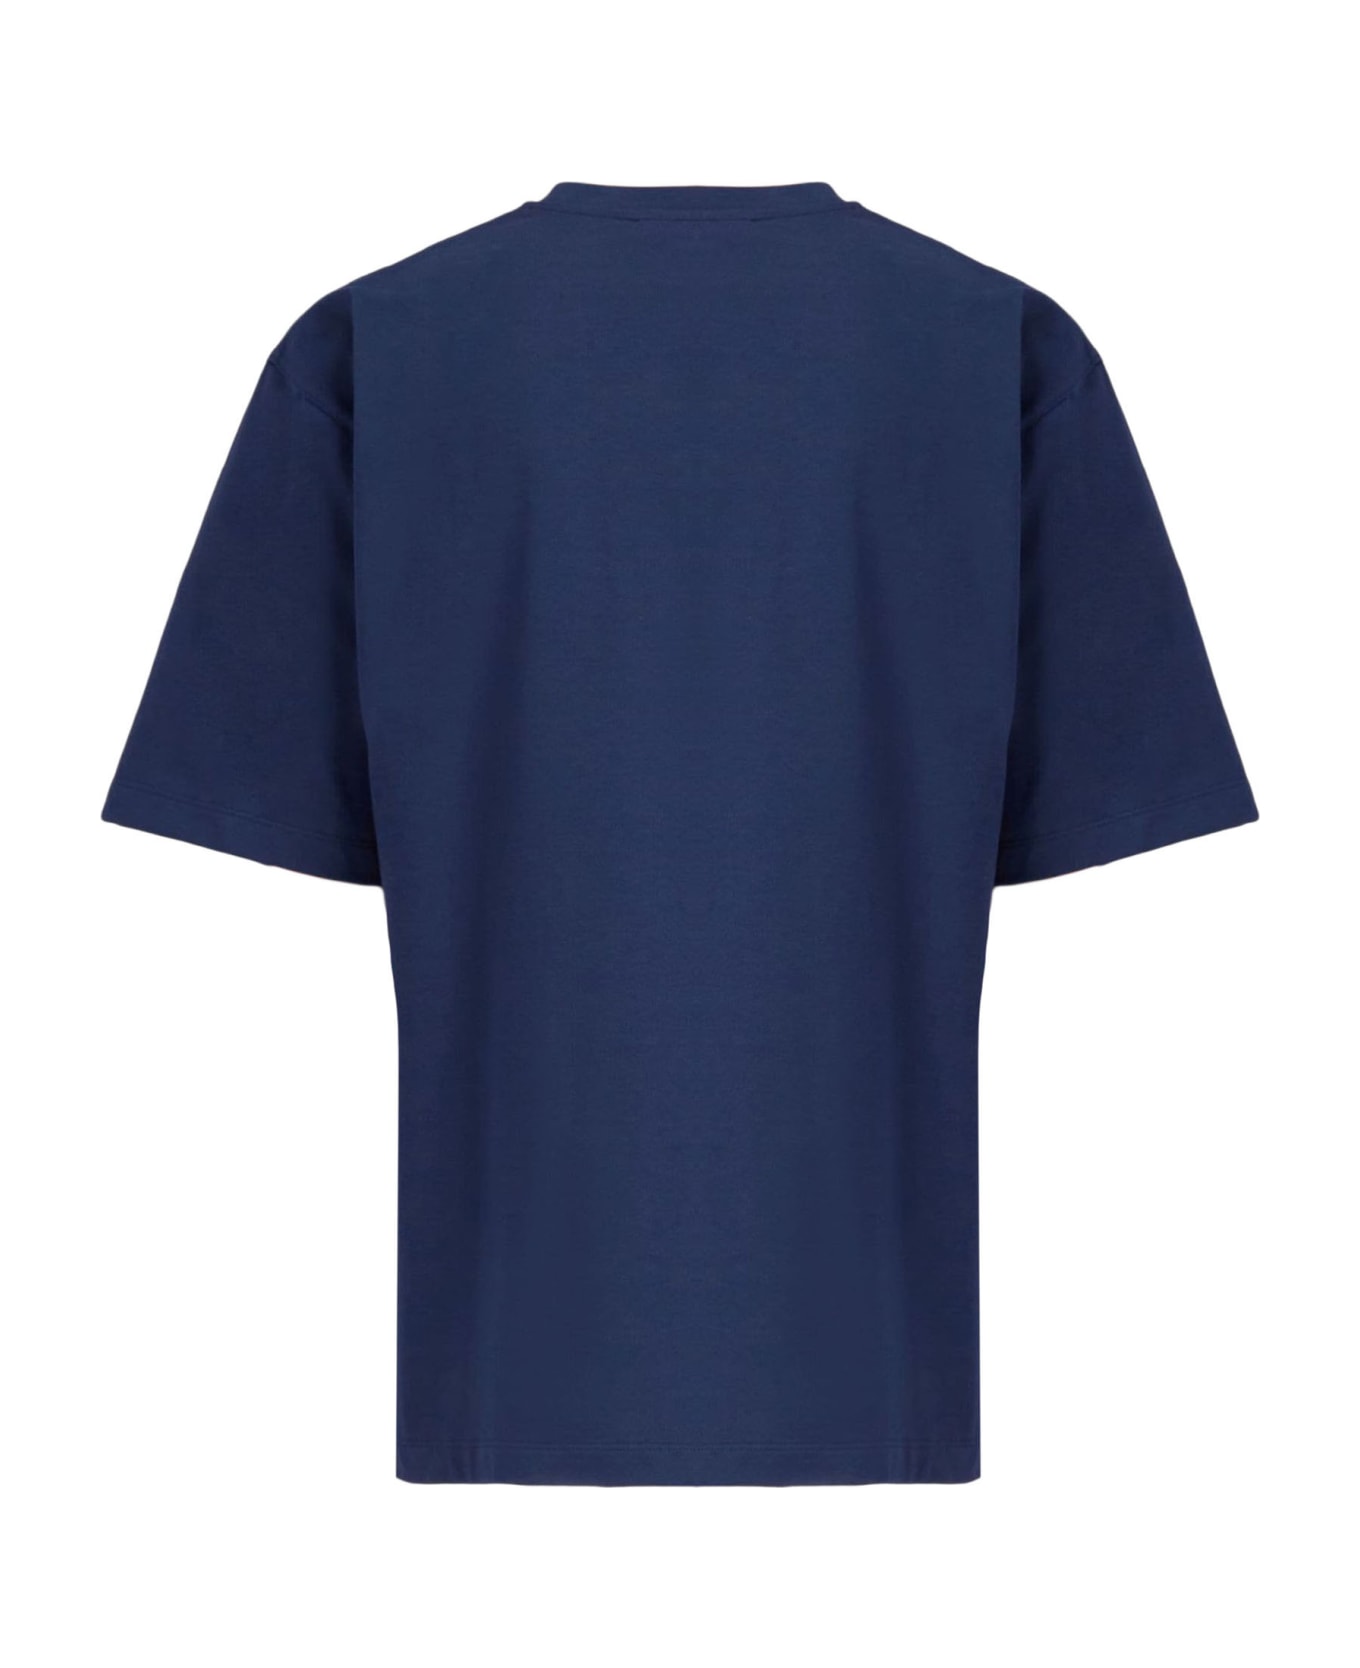 Marni Navy Blue Cotton T-shirt